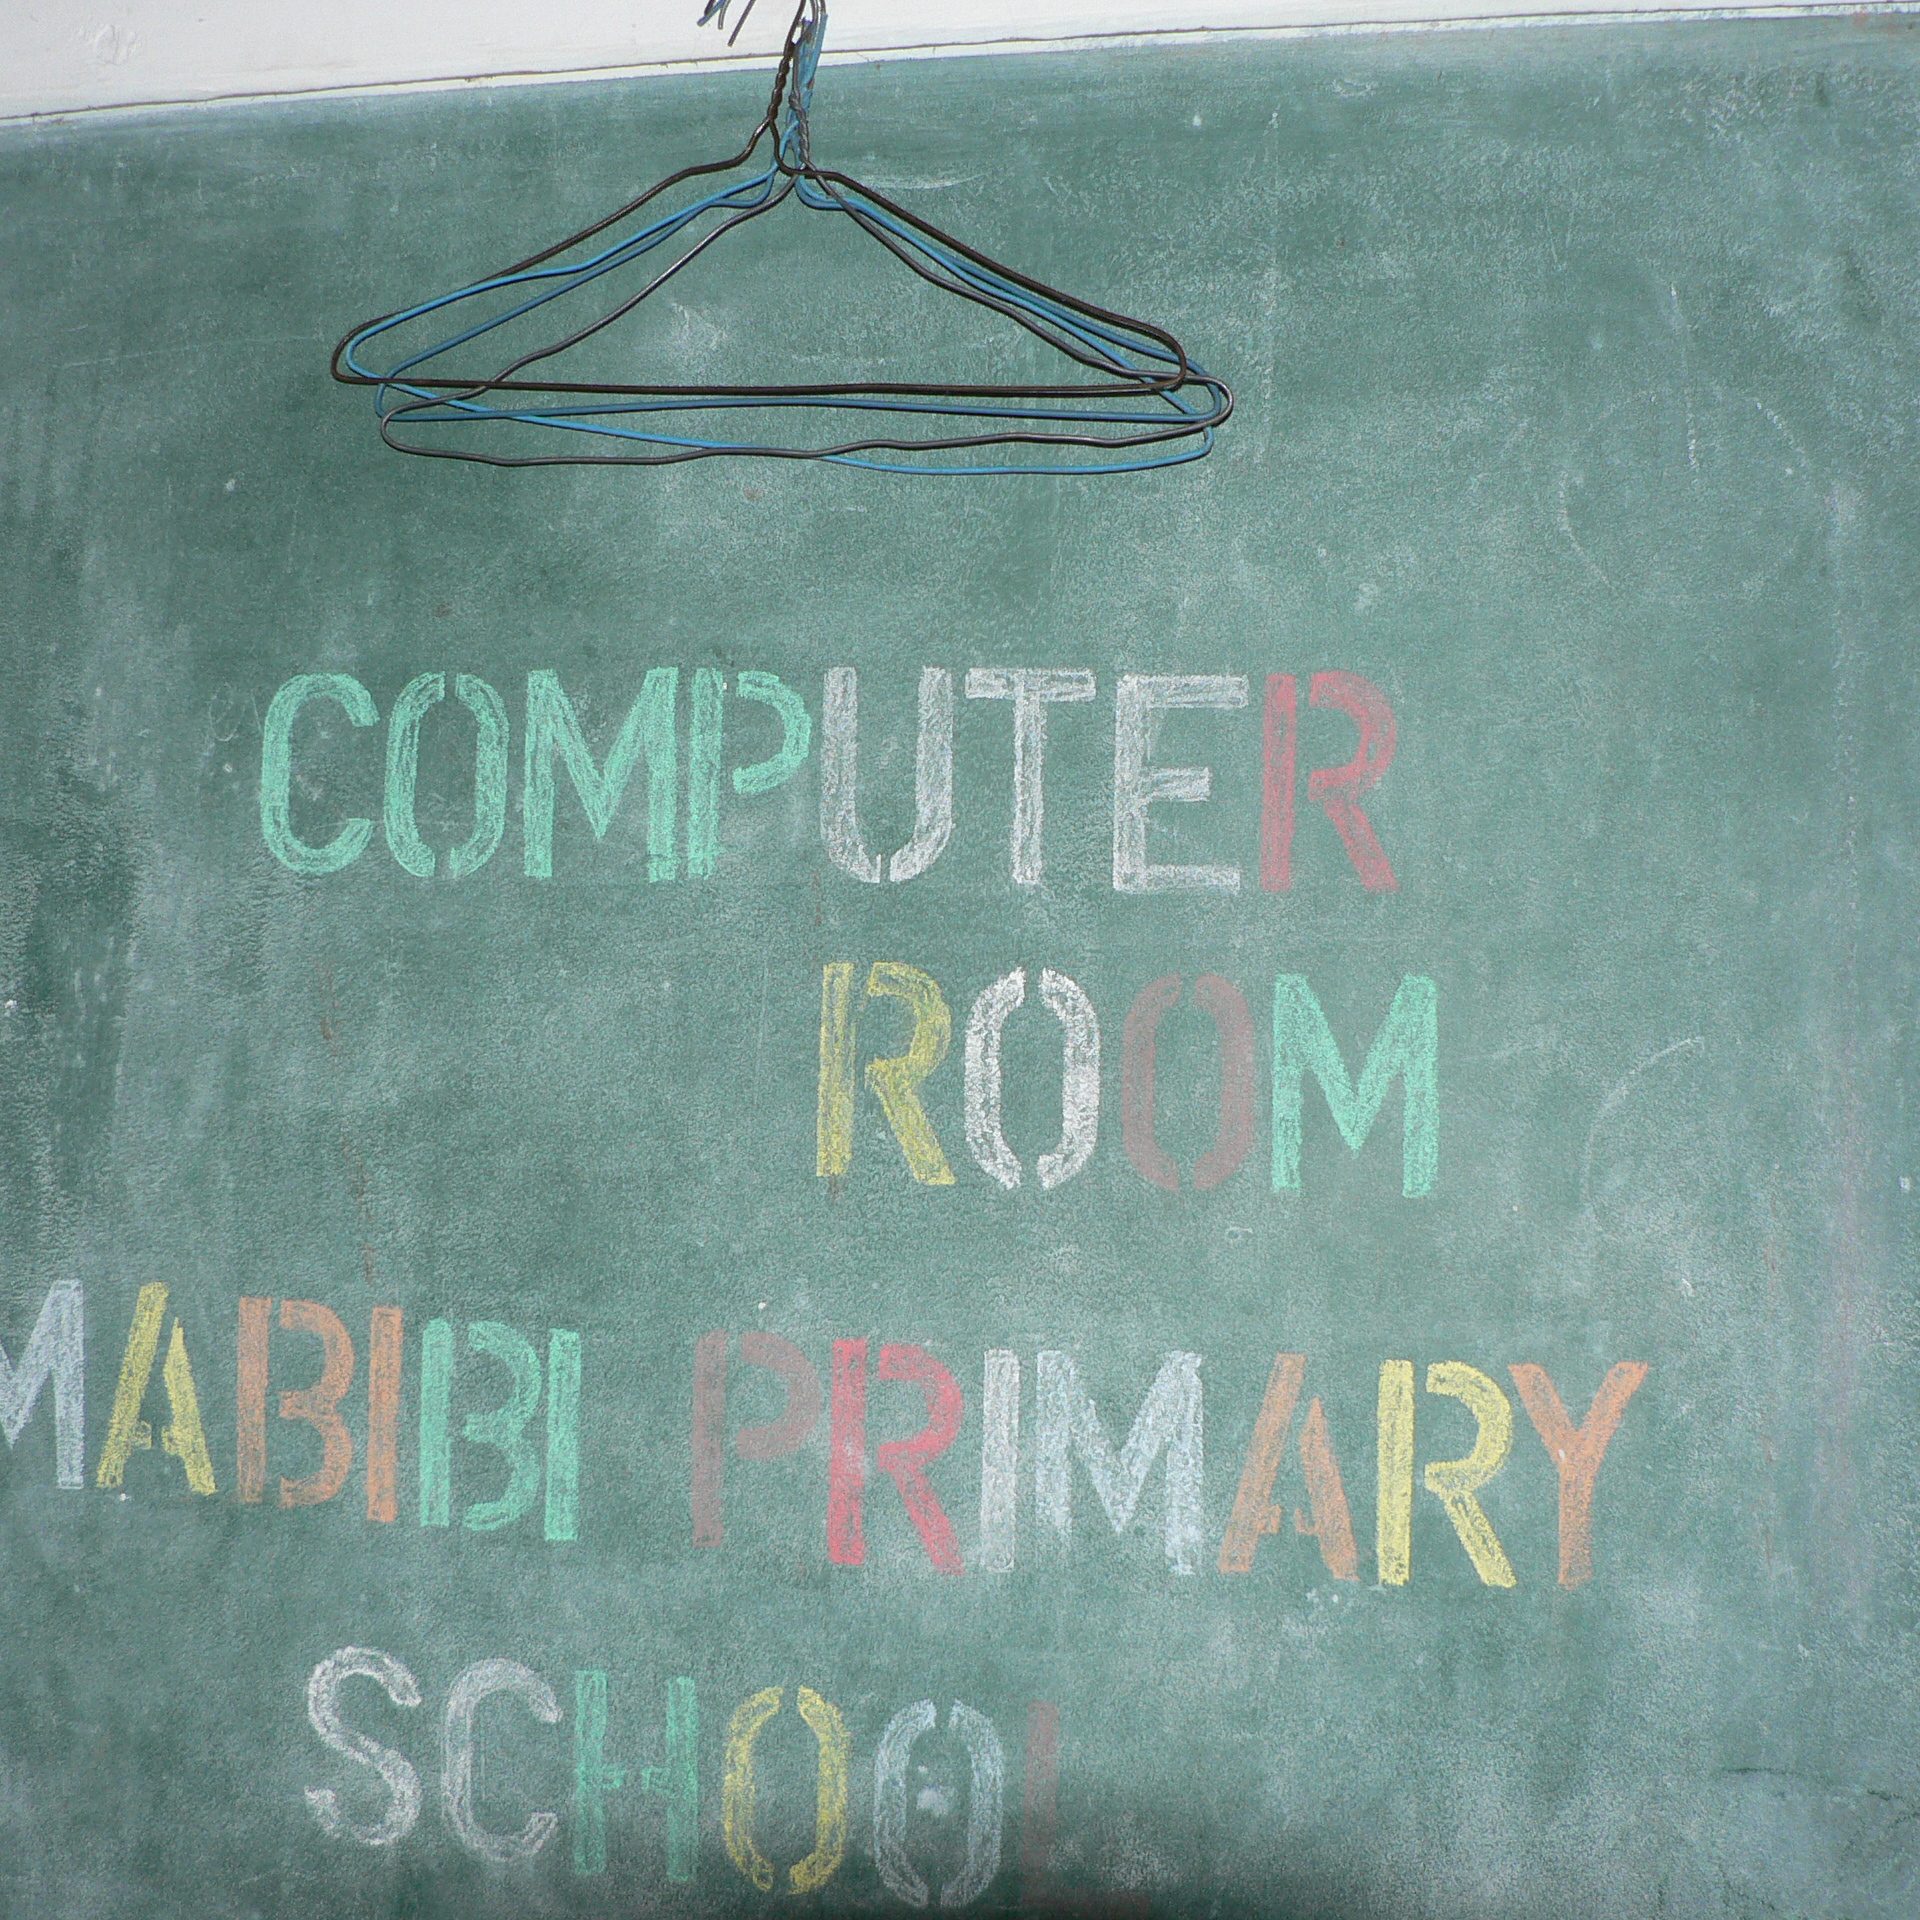 Mabibi Primary School Computer Room